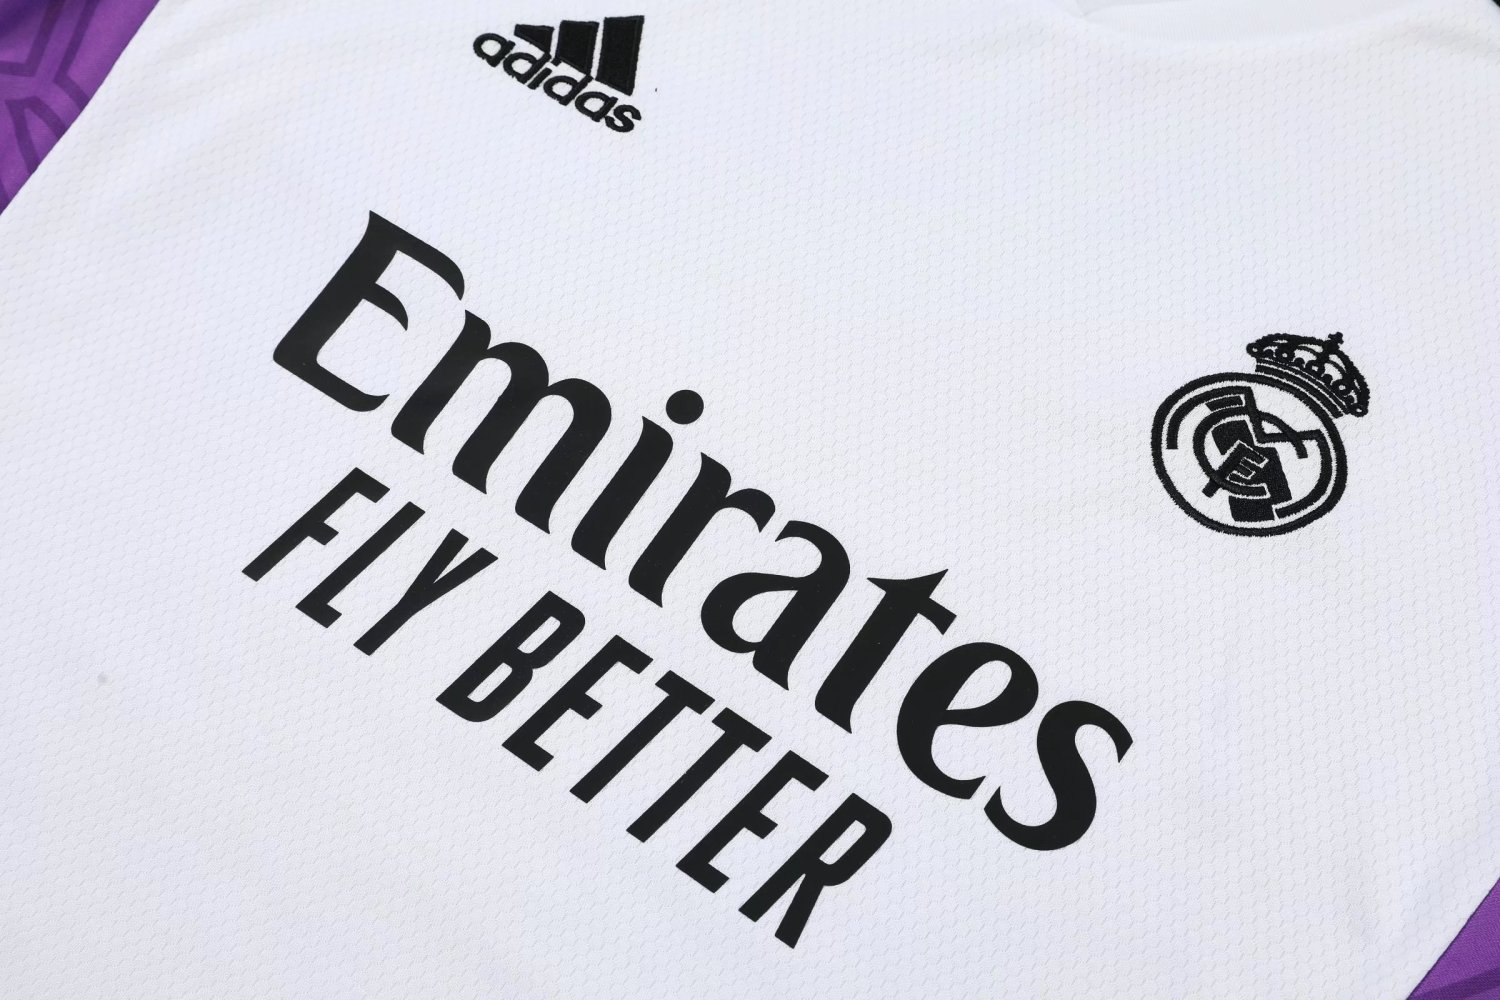 22-23 Real Madrid White Soccer Football Training Kit (Singlet + Shorts) Man